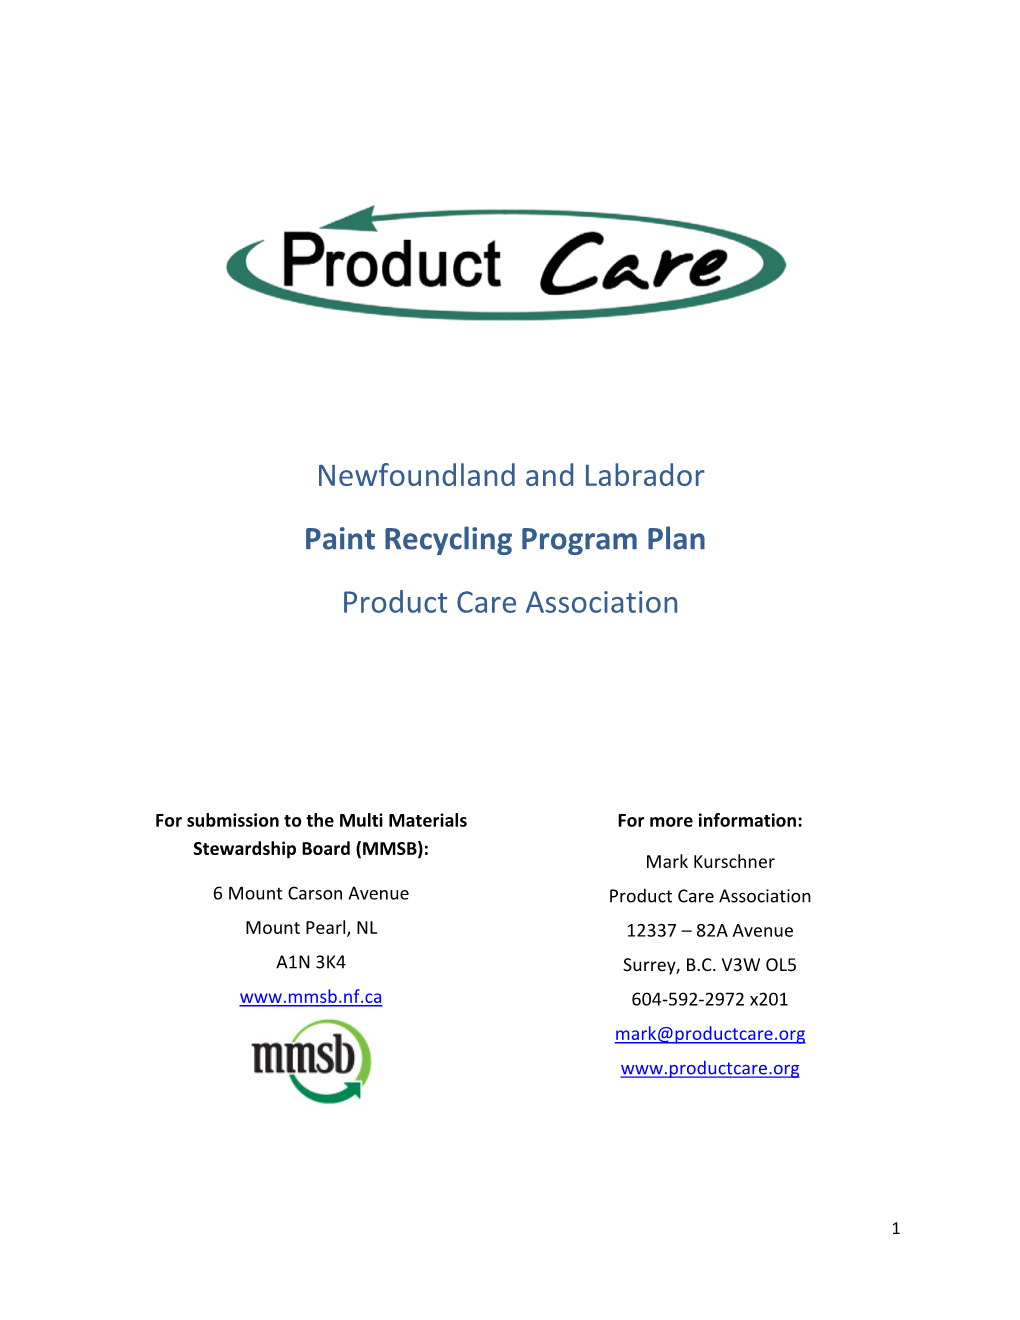 Newfoundland and Labrador Paint Recycling Program Plan Product Care Association